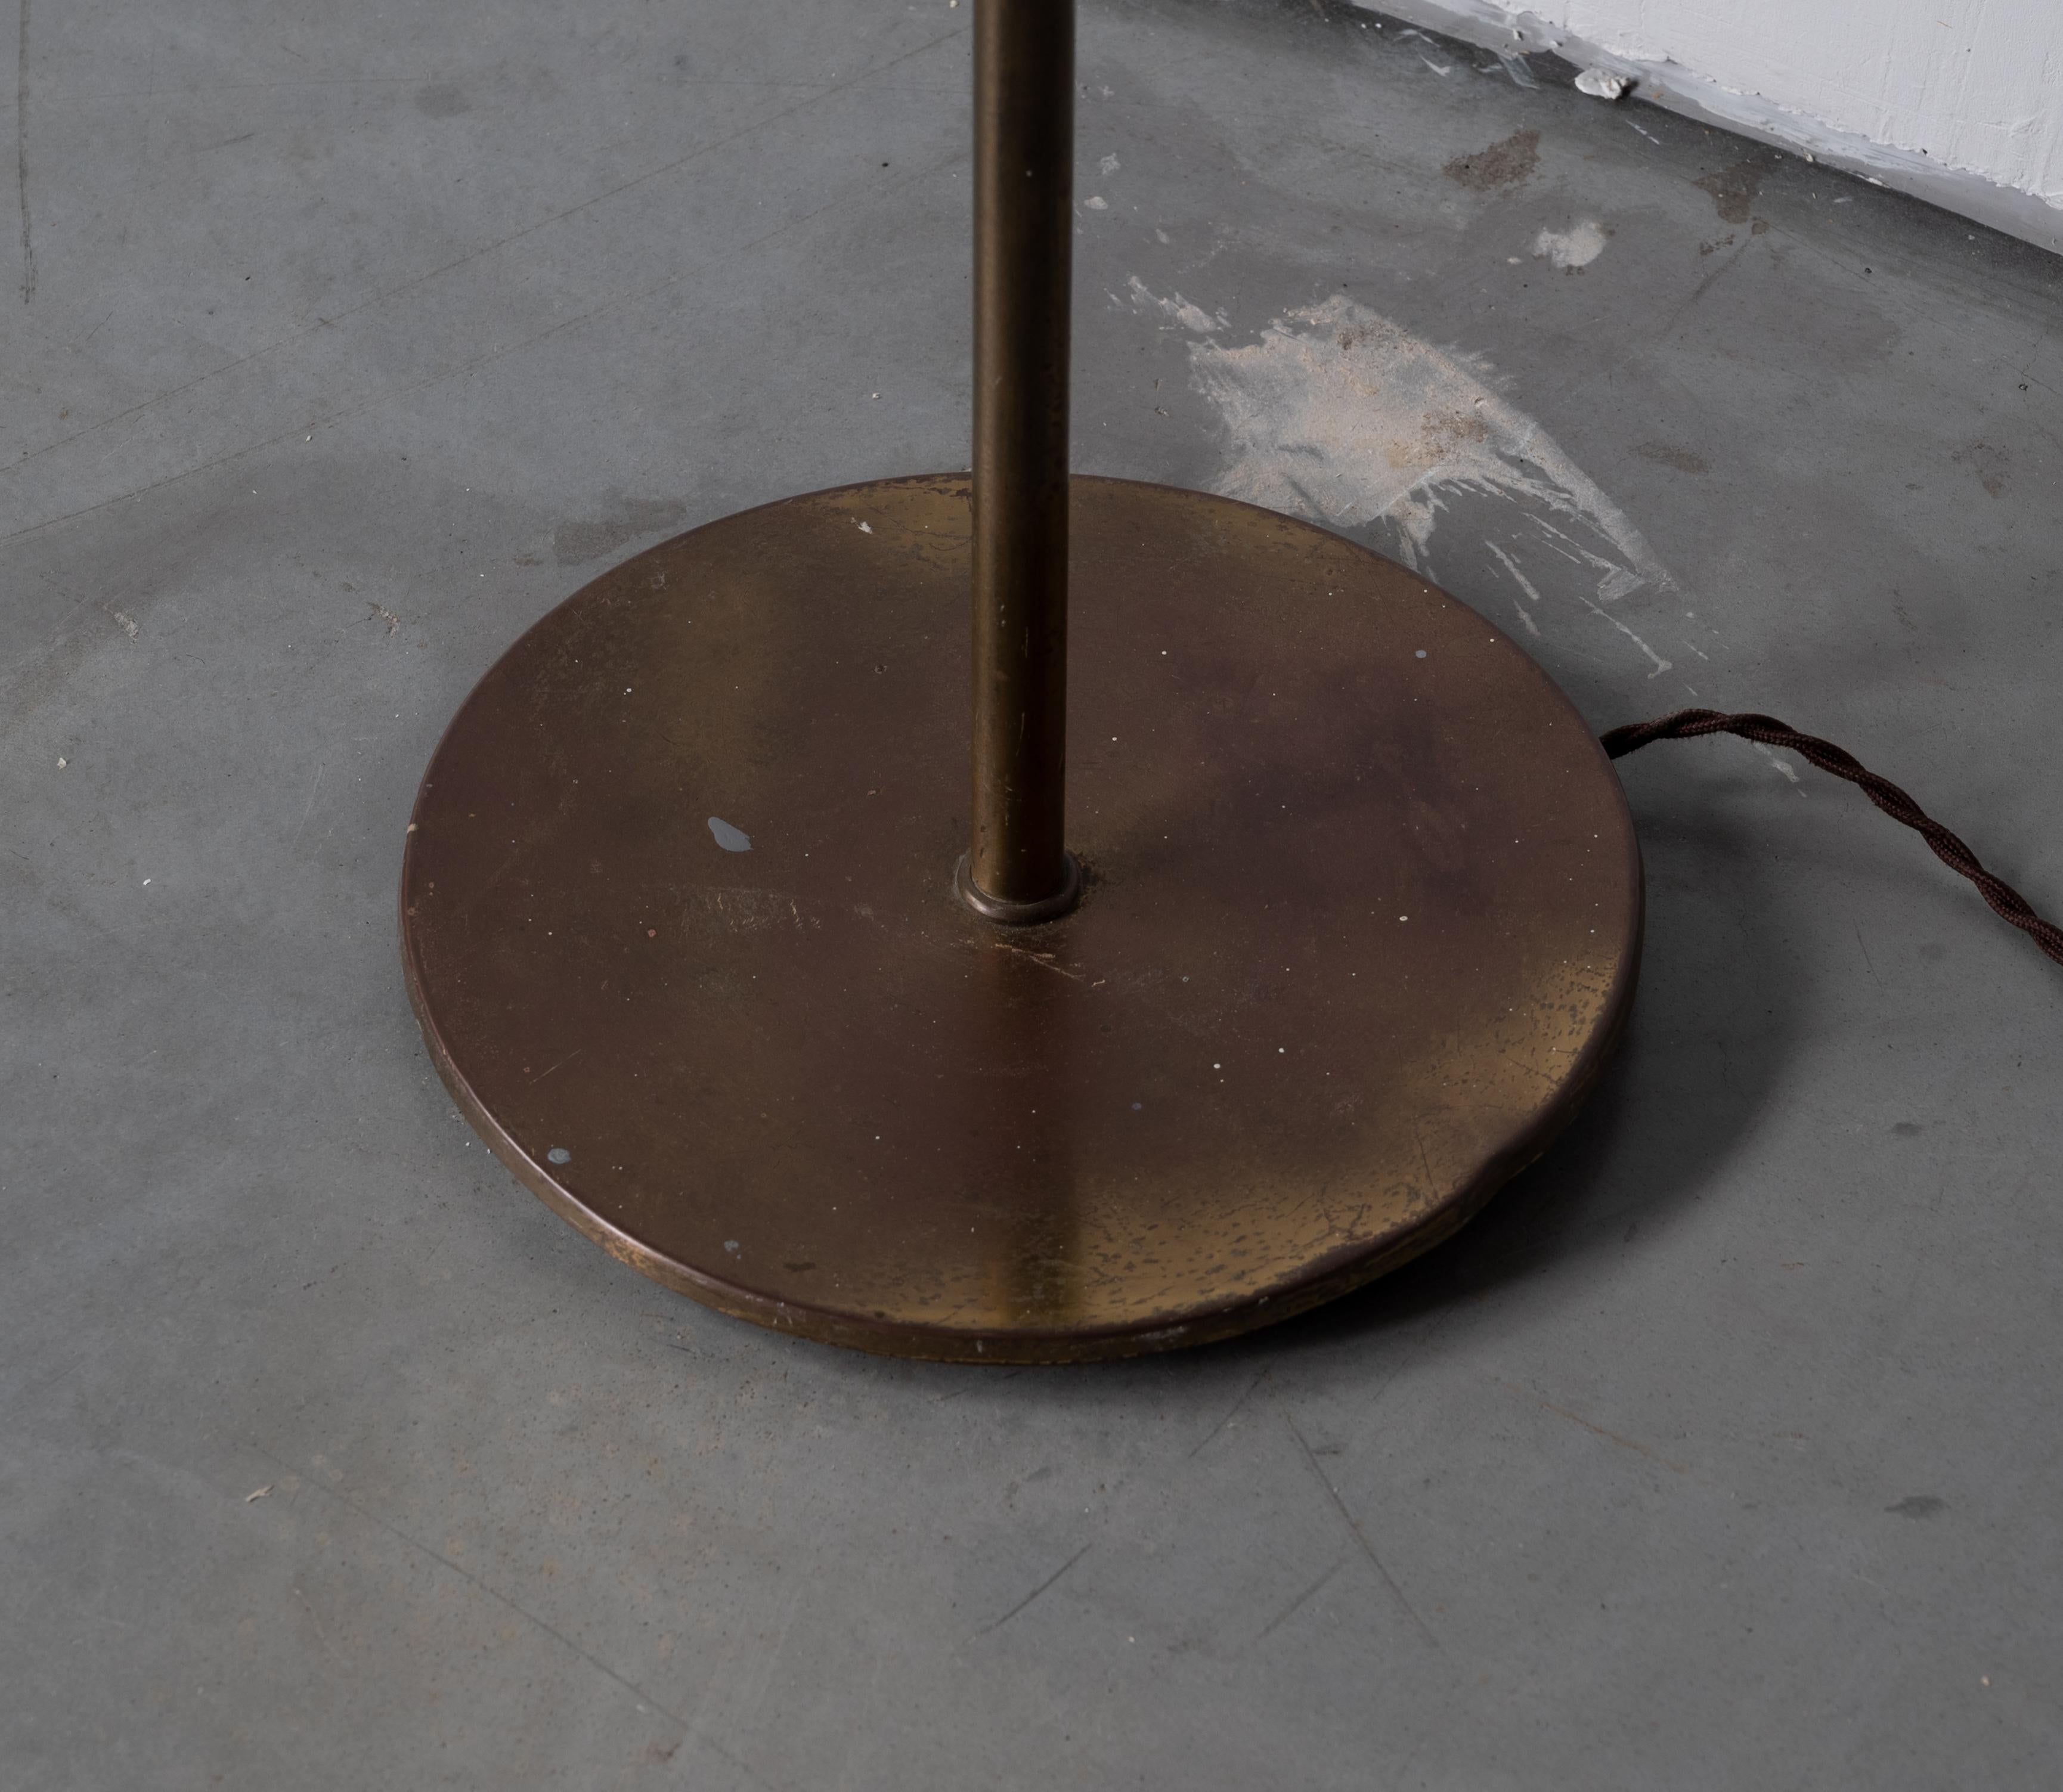 Mid-20th Century Danish Designer, Adjustable Floor Lamp, Brass, Fabric, Denmark, 1940s